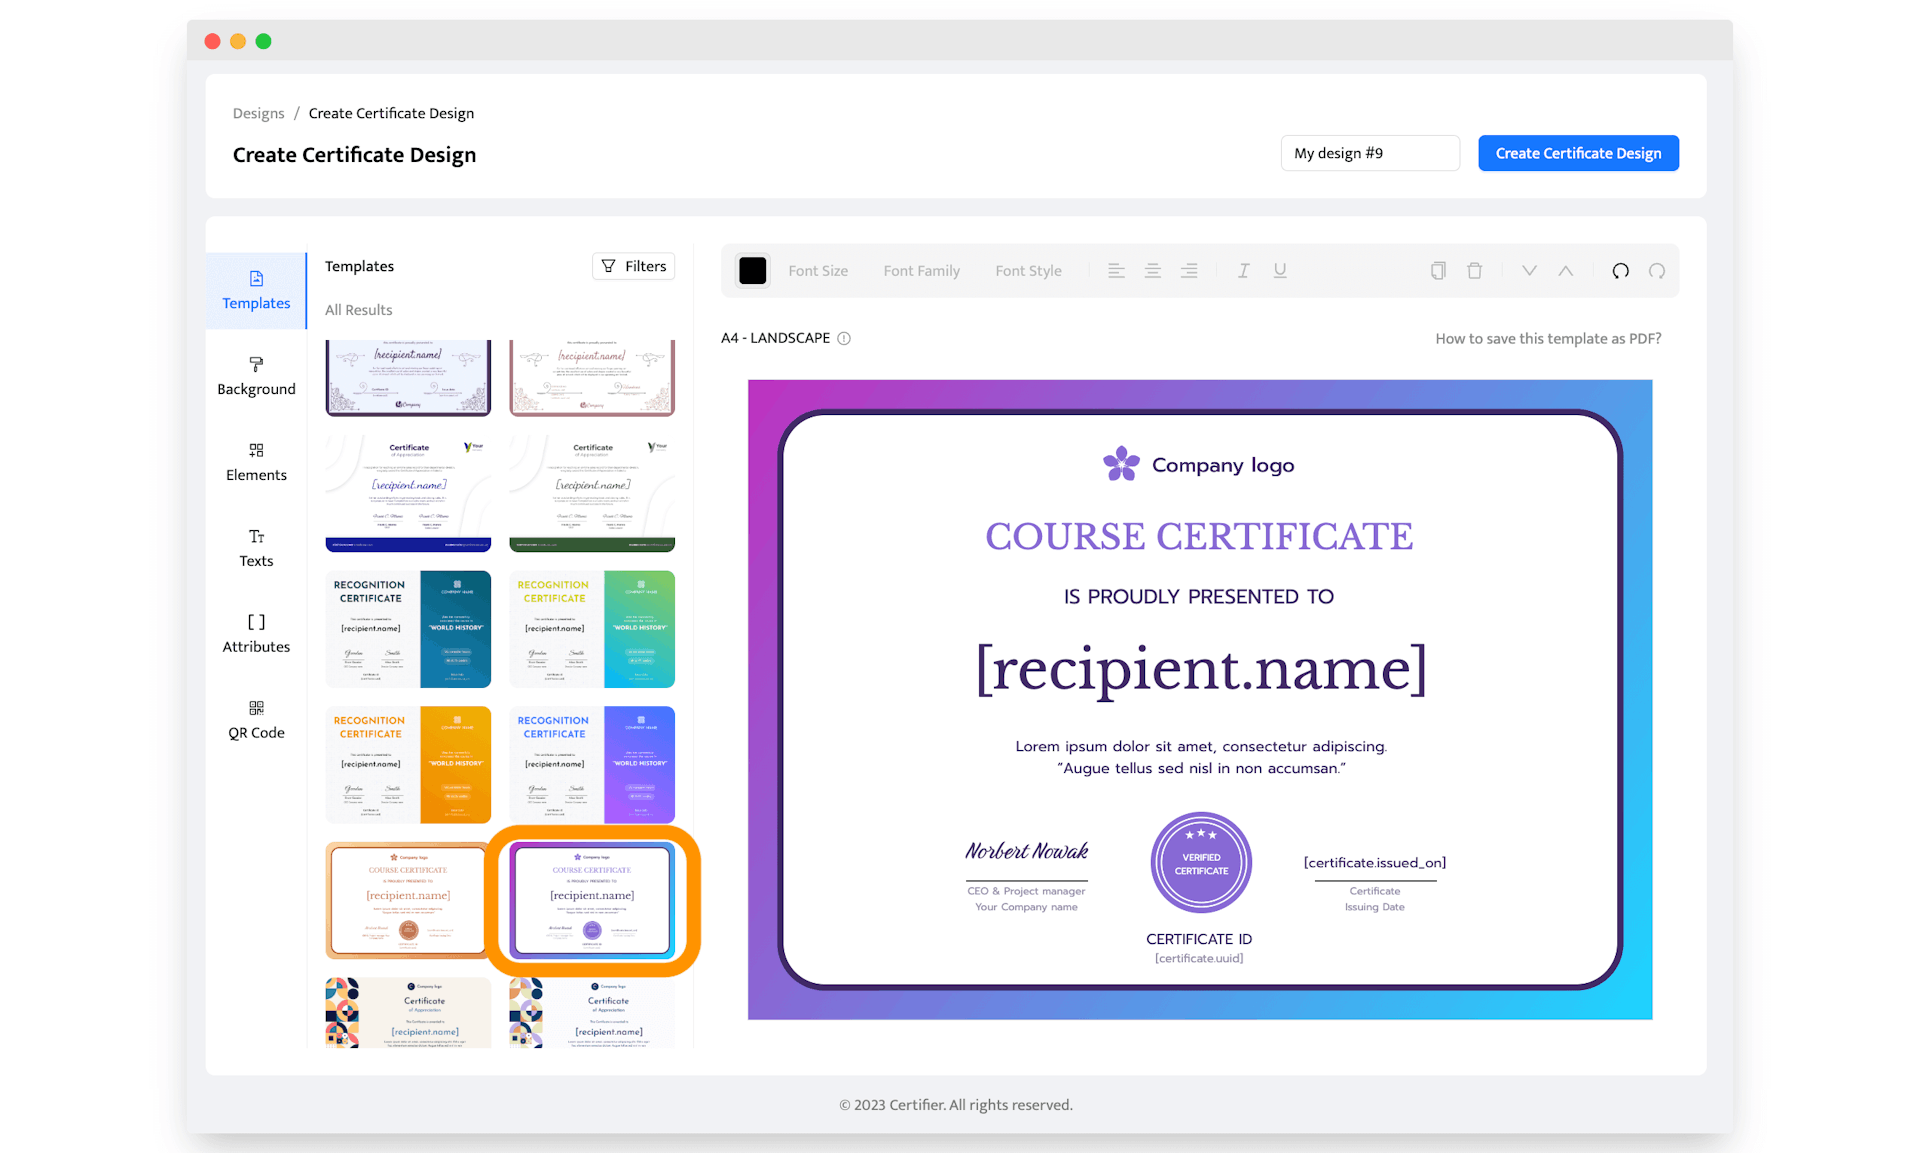 Choosing certificate template in Certifier dashboard.